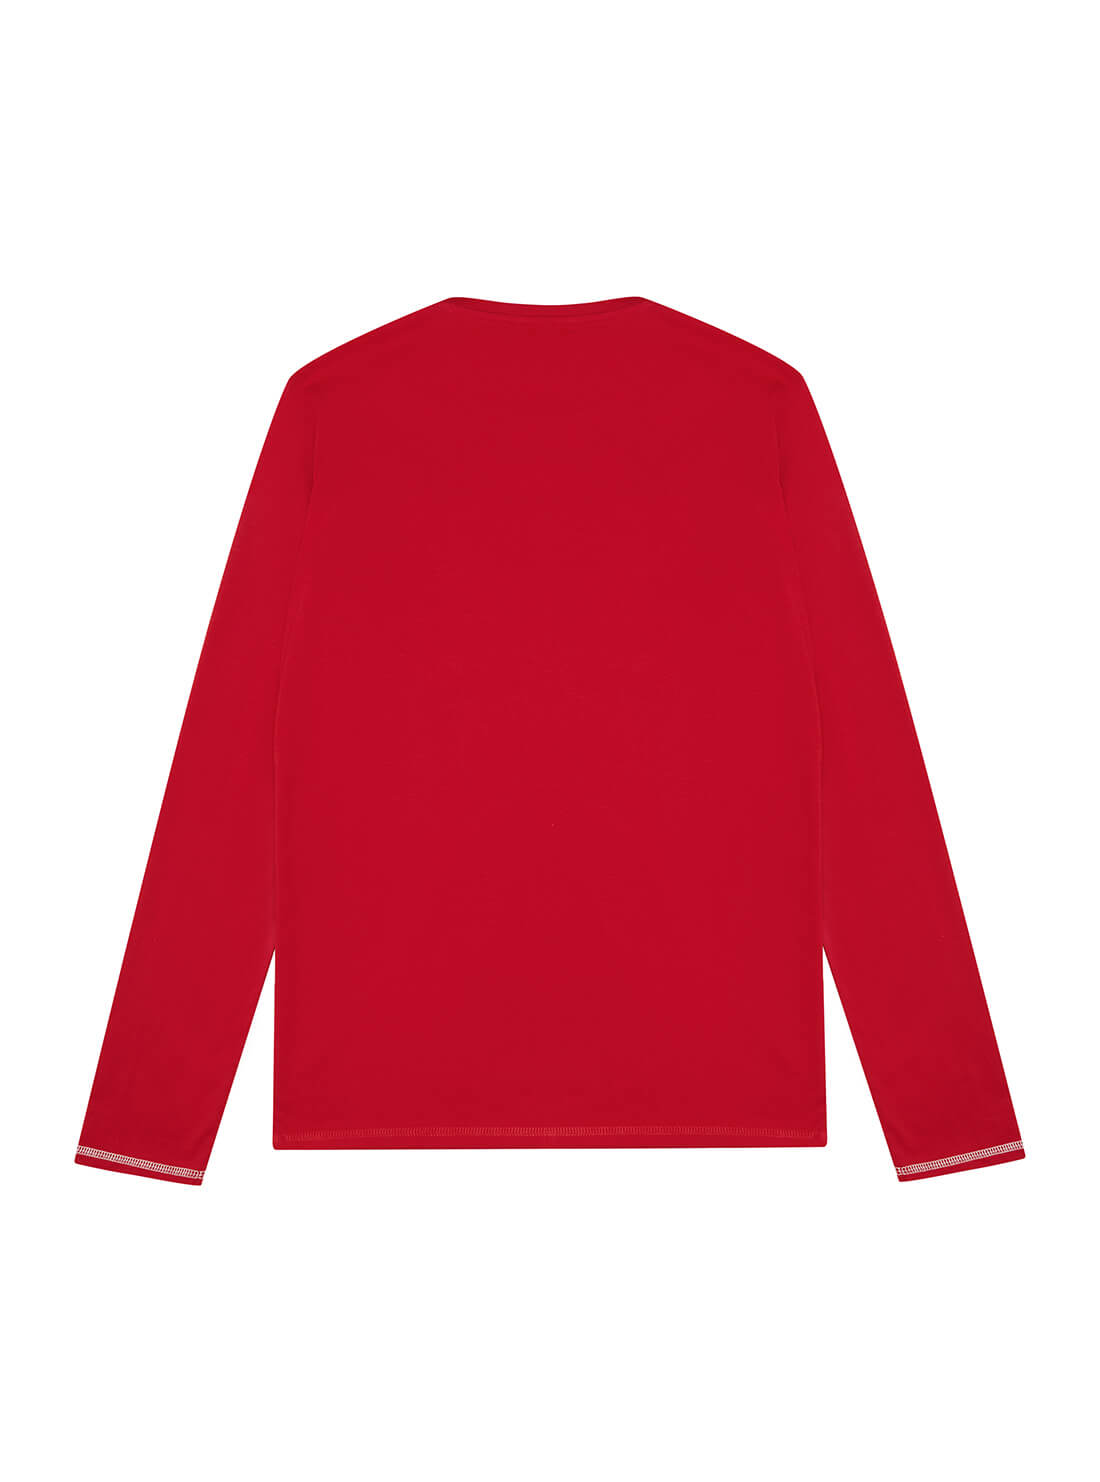 GUESS Big Boy Red Graphic Logo Long Sleeve T-Shirt (7-16)  L1YI17K8HM0 Back View